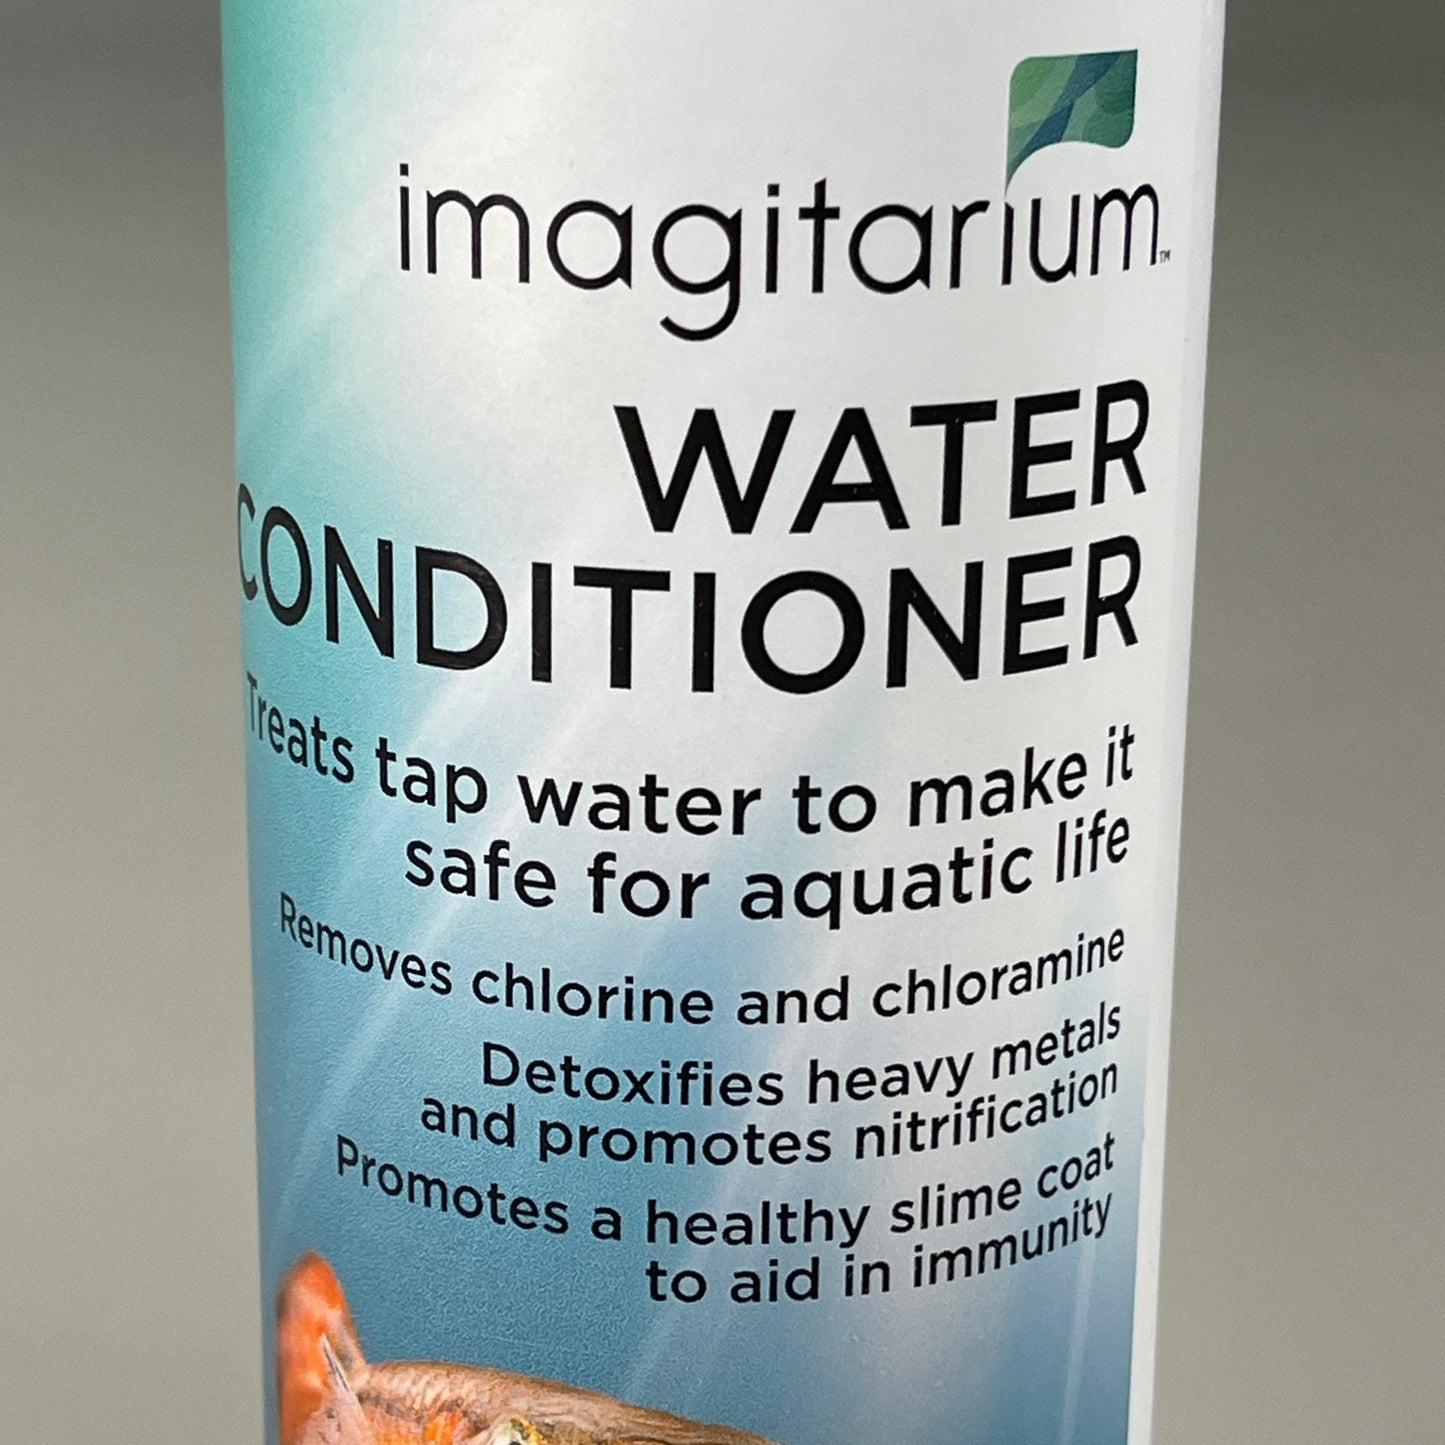 IMAGITARIUM Water Conditioner Treats Tap Water For Aquatic Life 16 oz 7/25 (New)